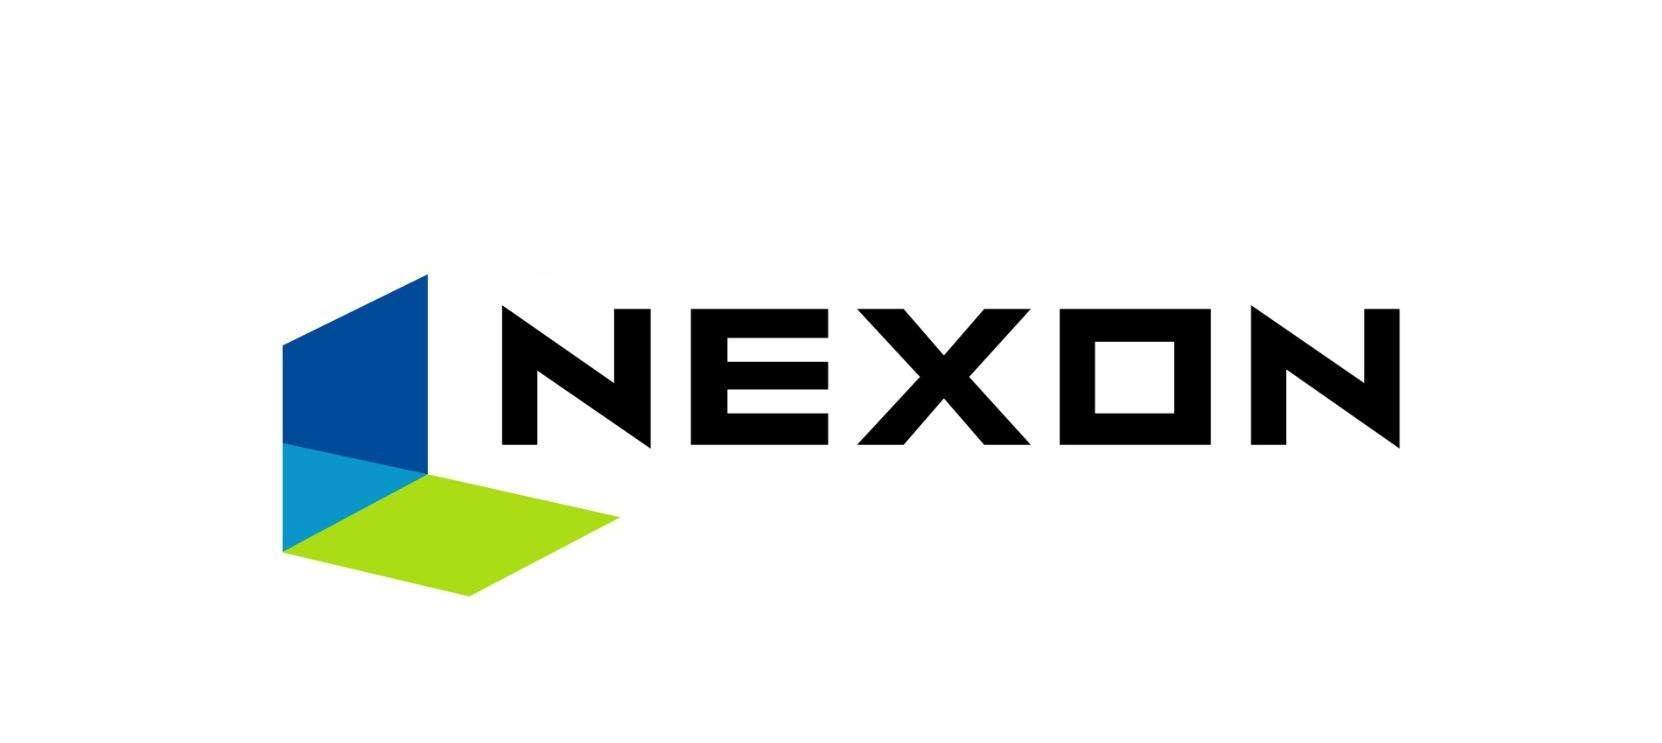 Nexon將香港手遊公司6Waves 出售給瑞典Stillfront Group